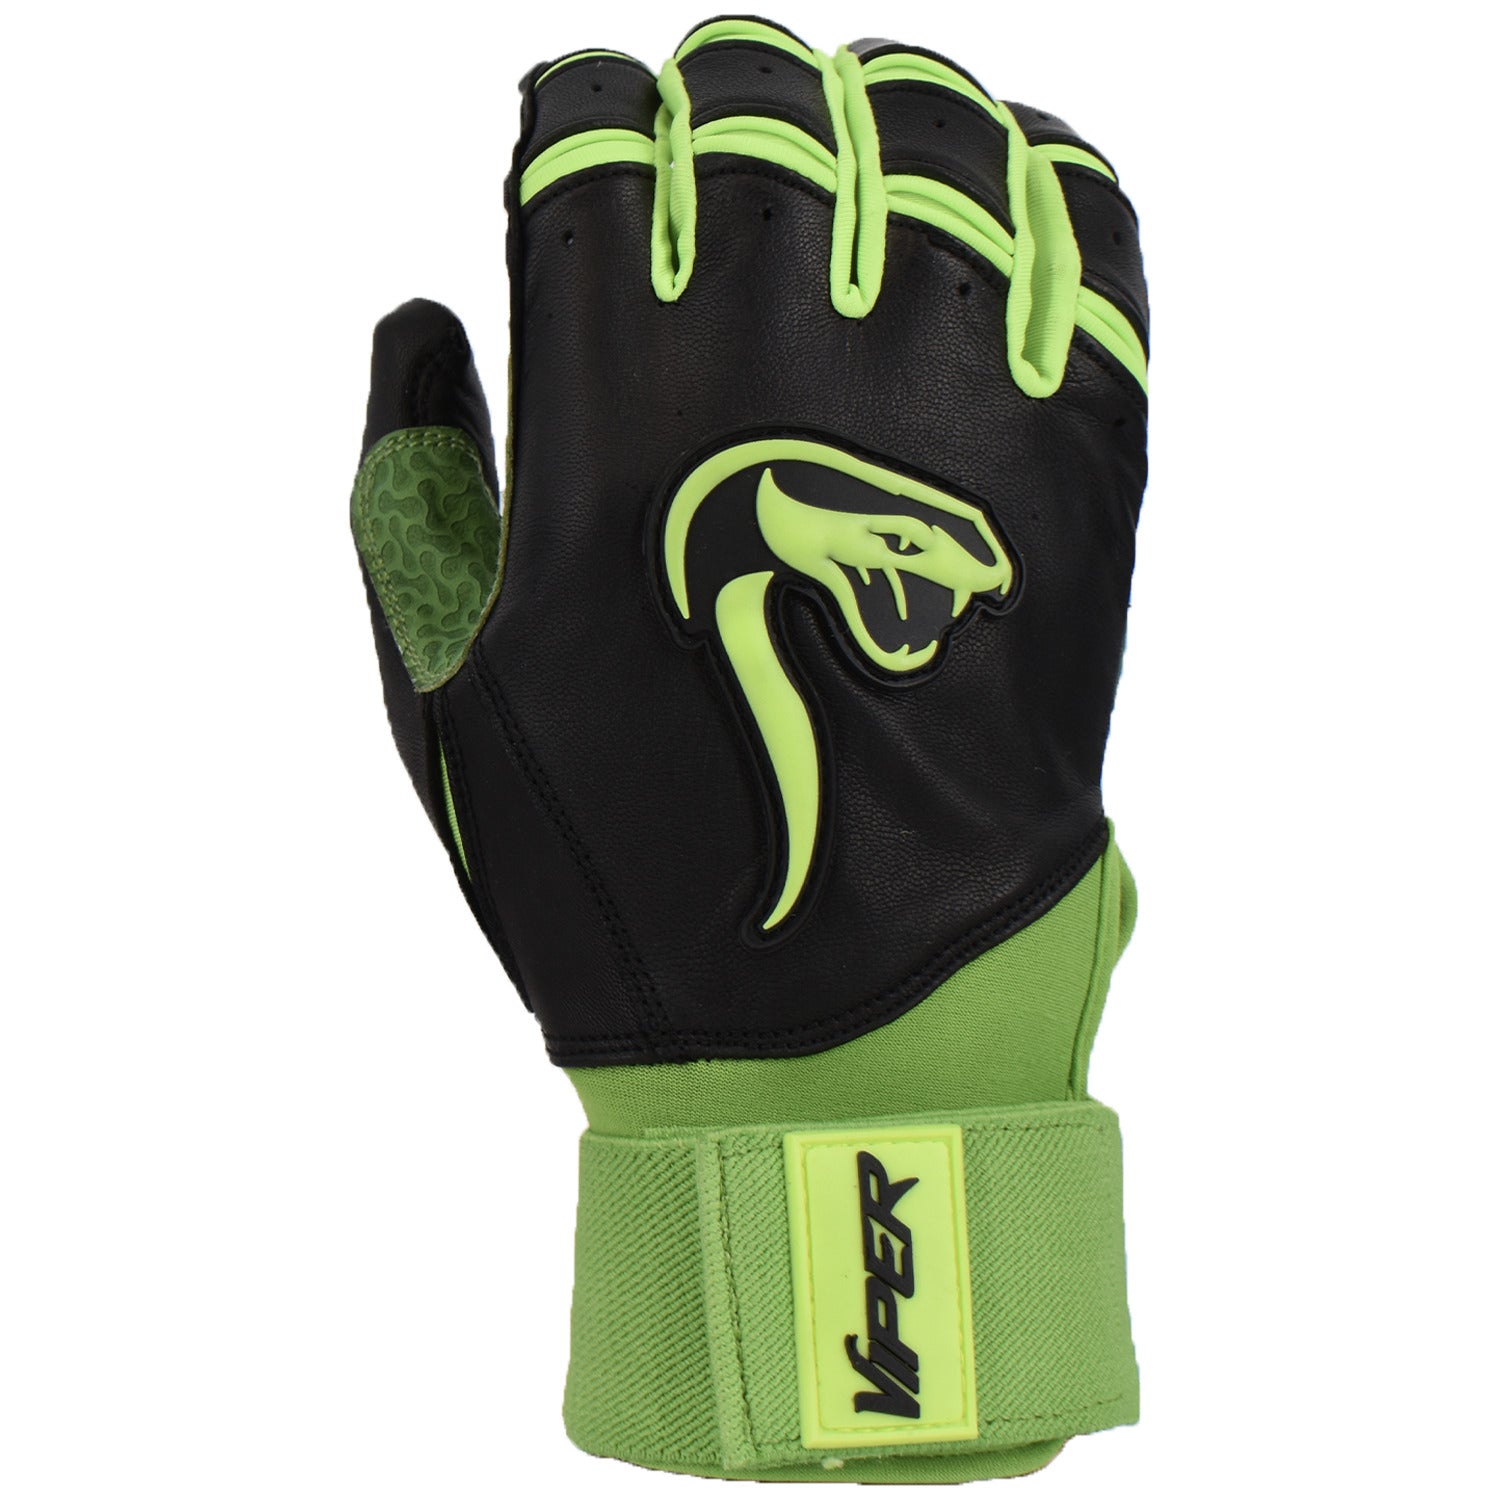 Viper Grindstone Long Cuff Batting Glove - Black/Neon Green